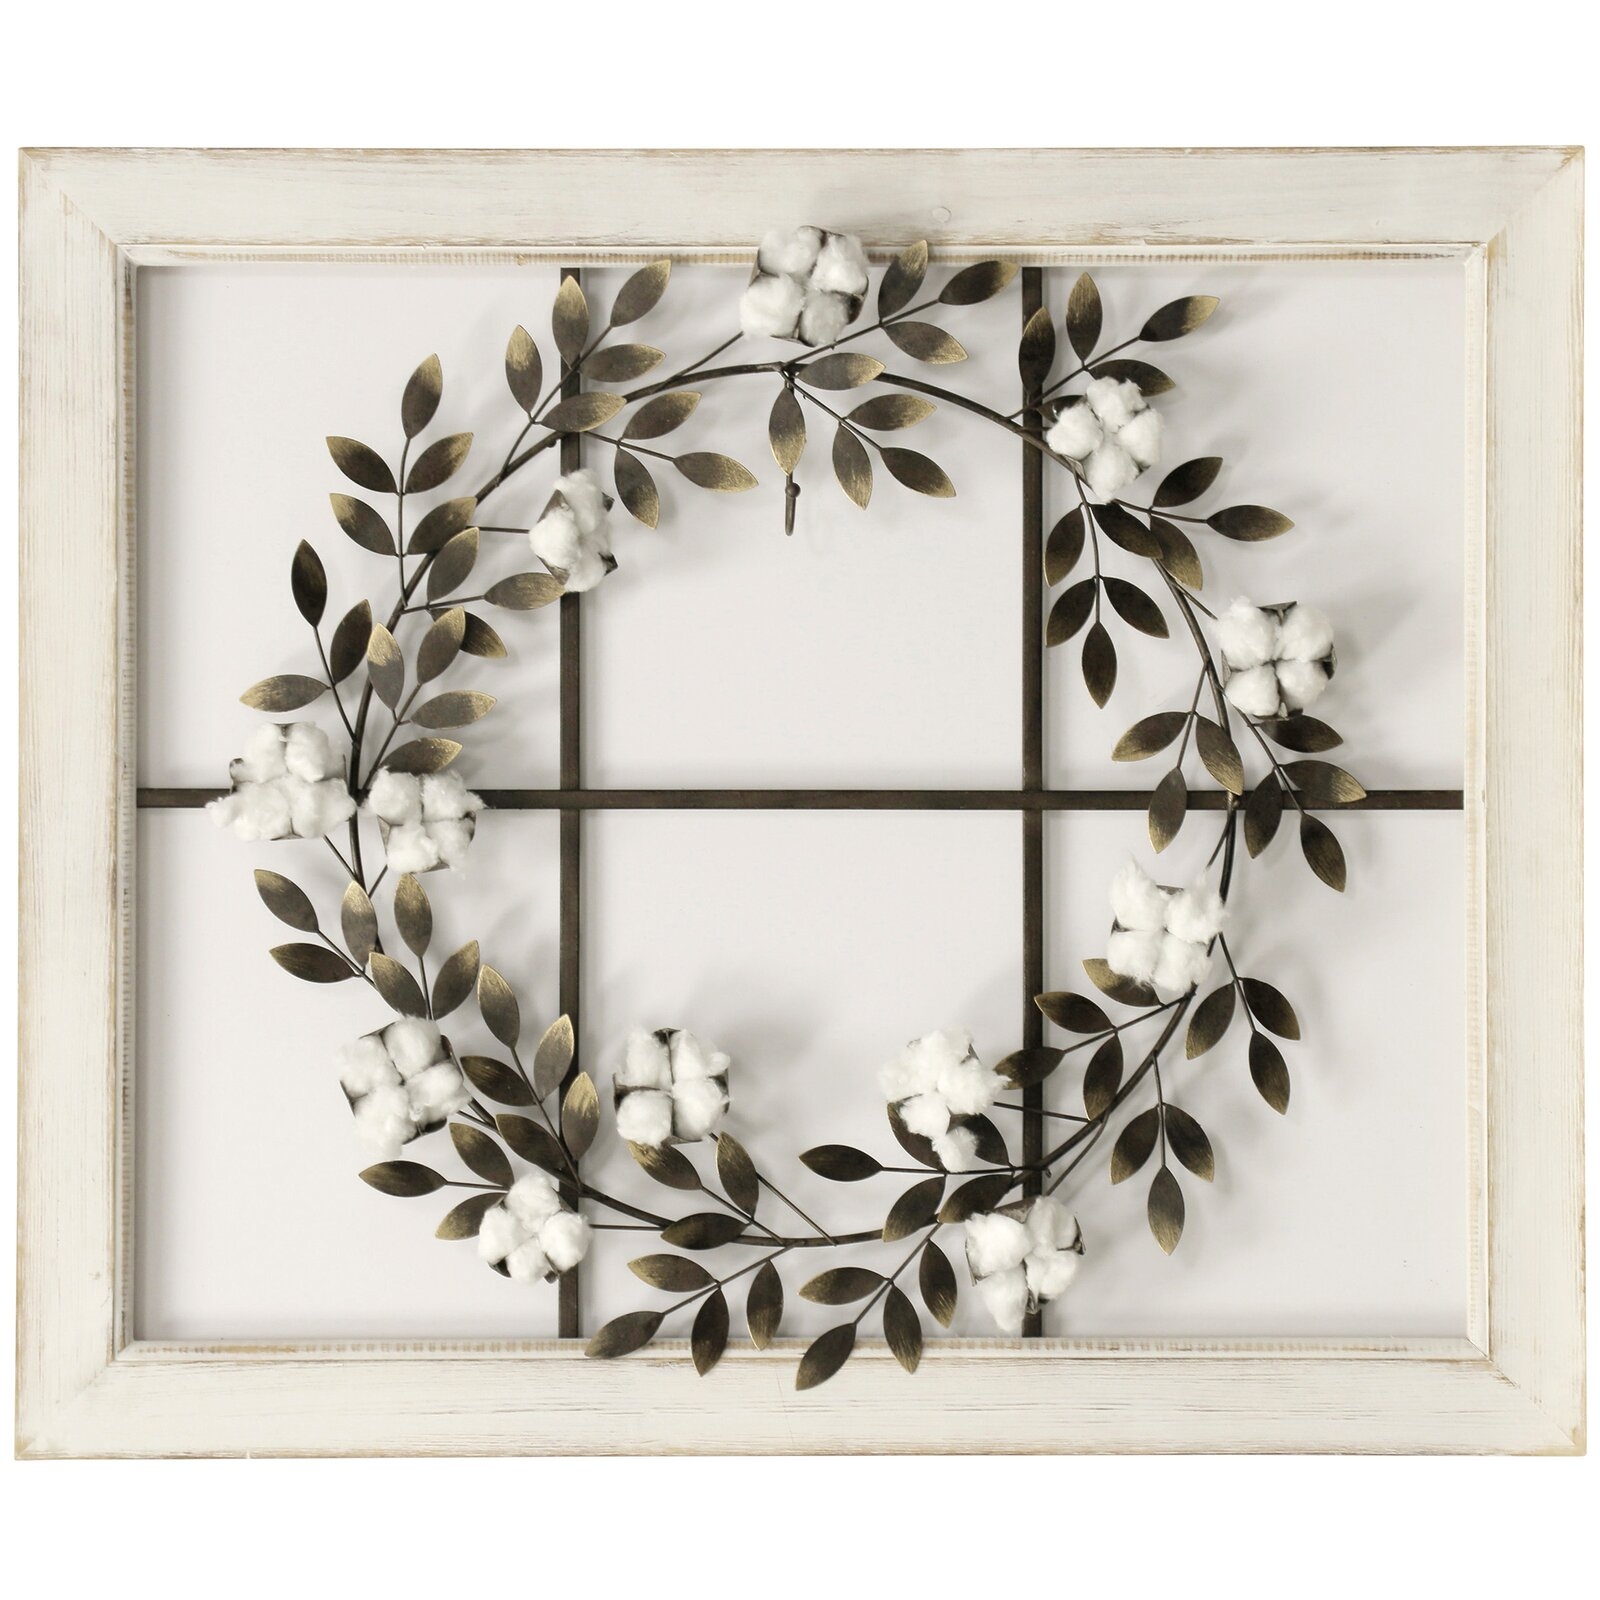 Floral Wreath Wood Framed Wall Décor - Image 0